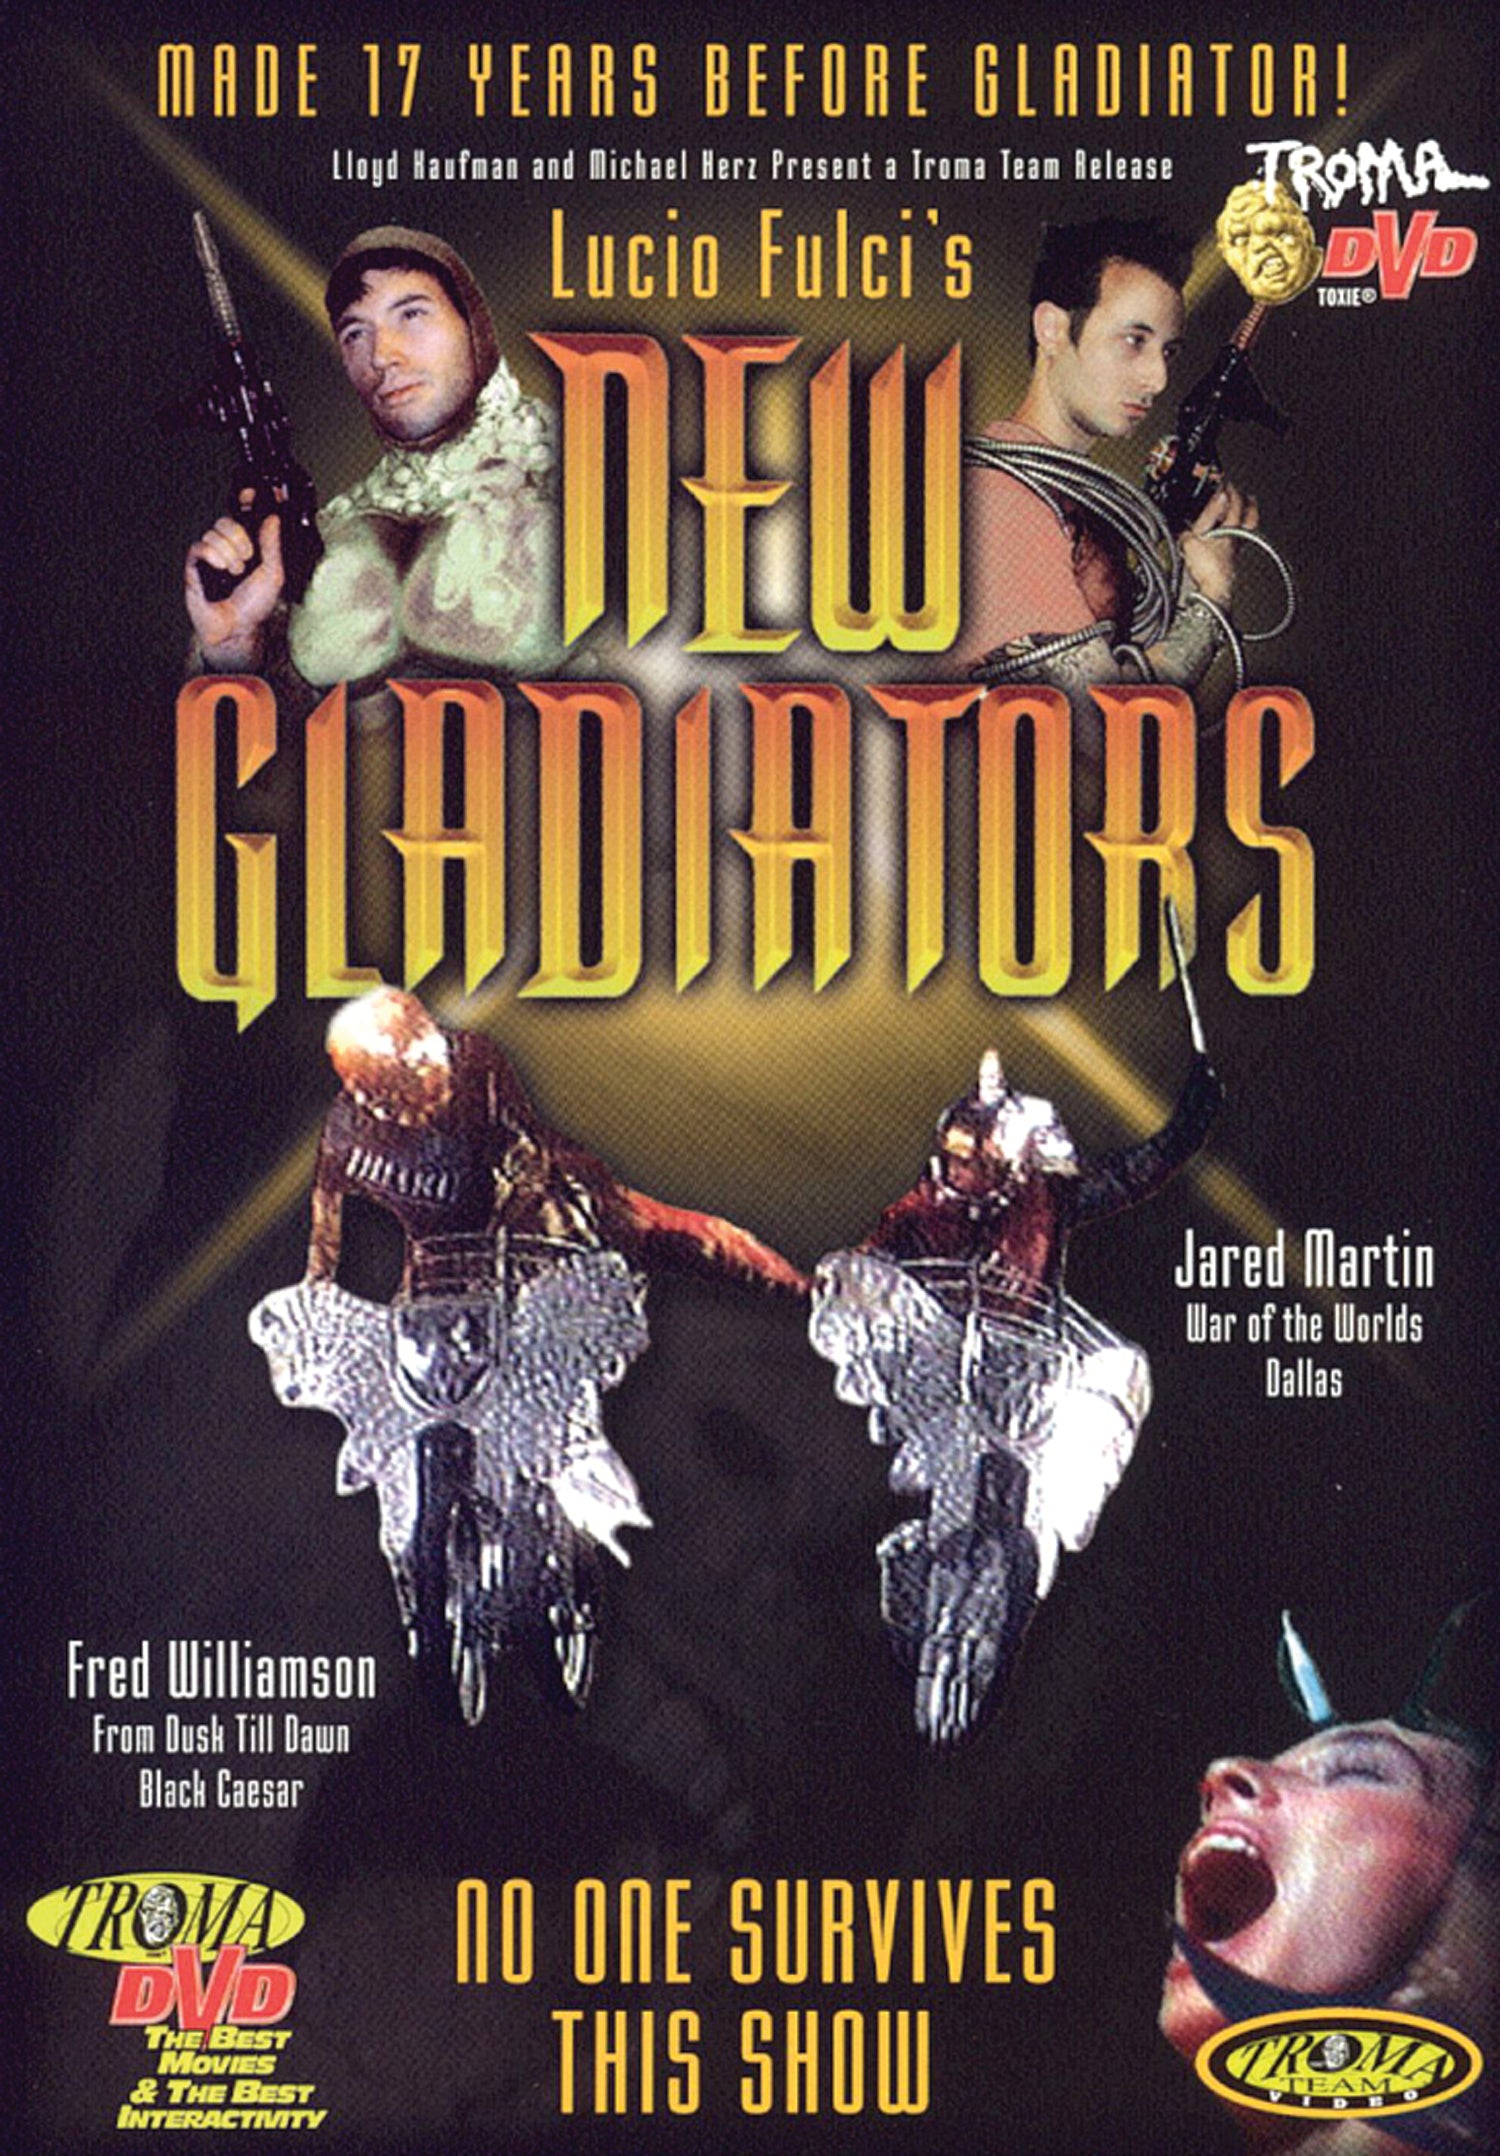 NEW GLADIATORS DVD